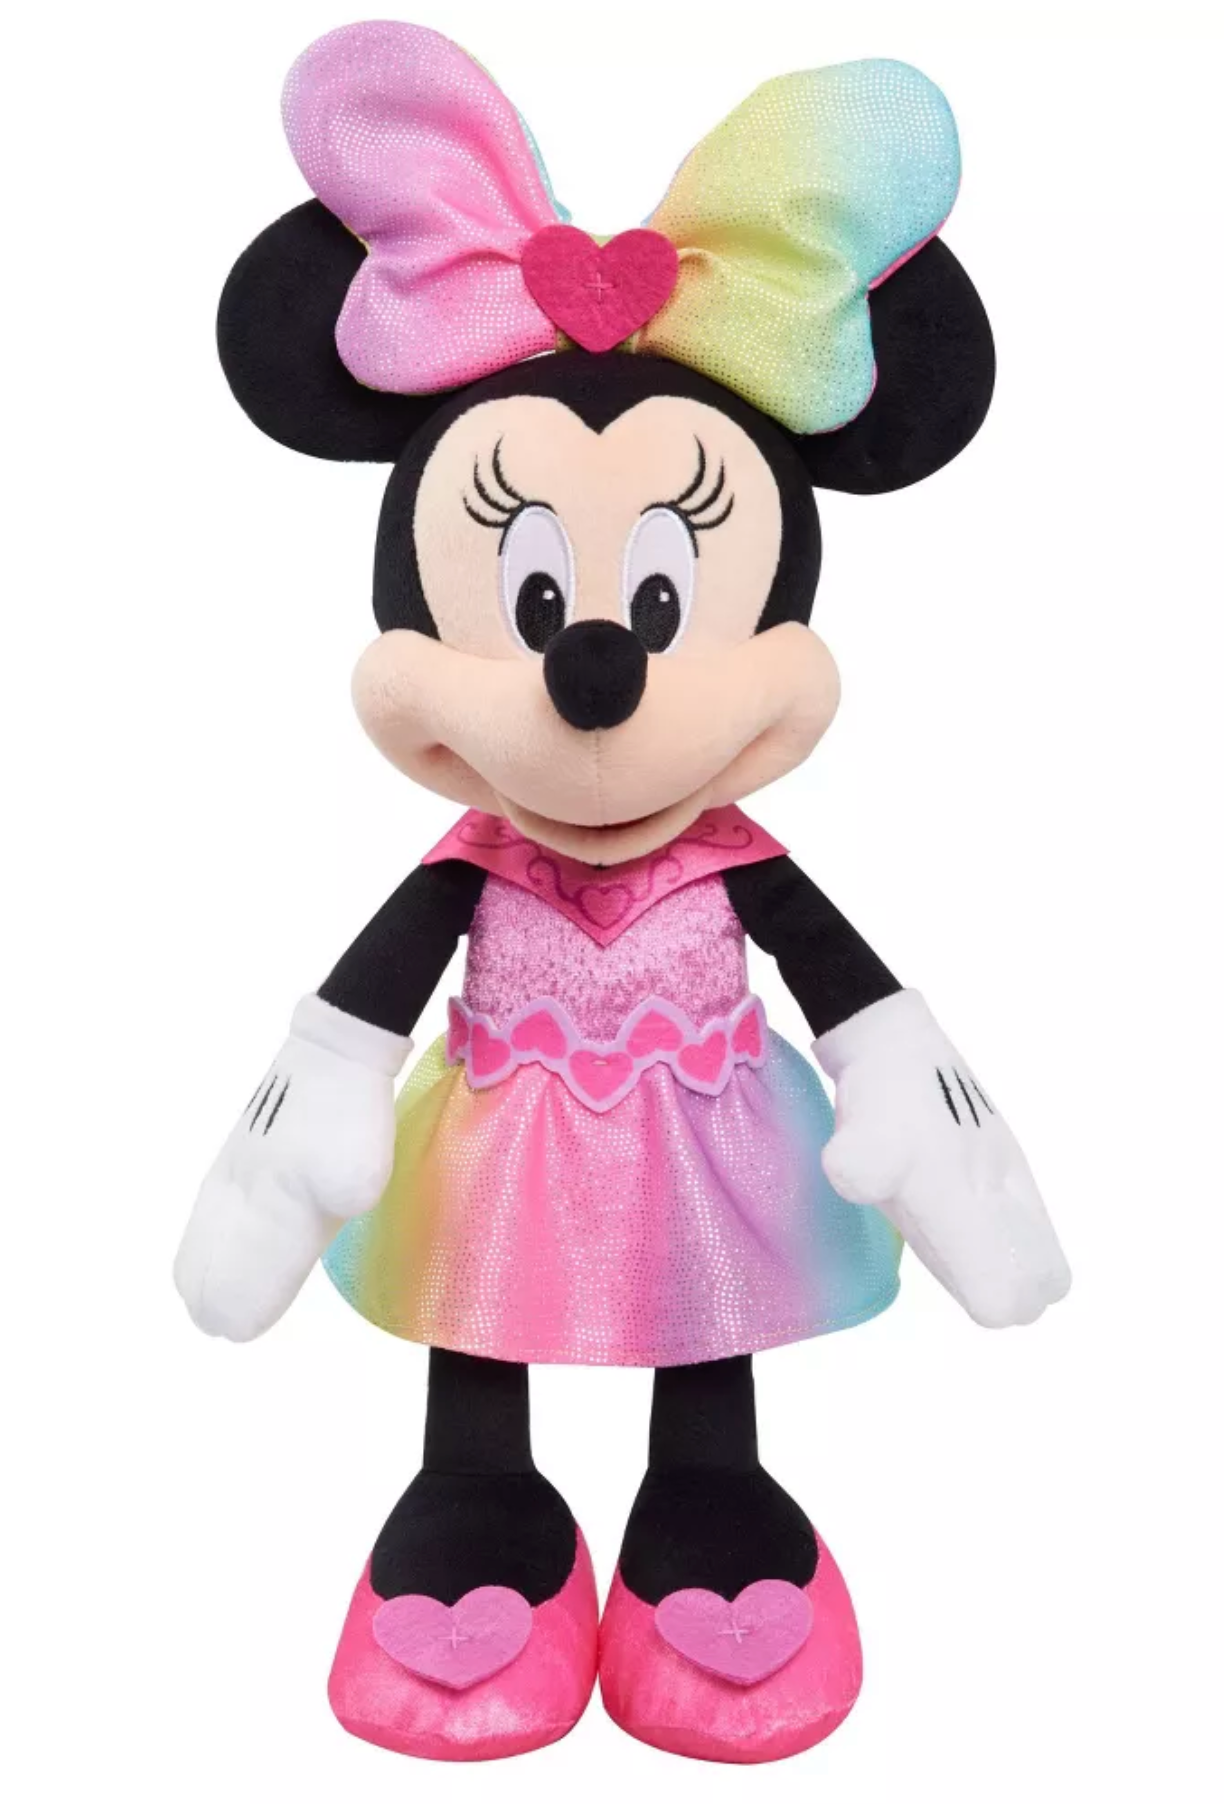 Disney Junior Sparkle & Sing Minnie Plush Doll New with Box